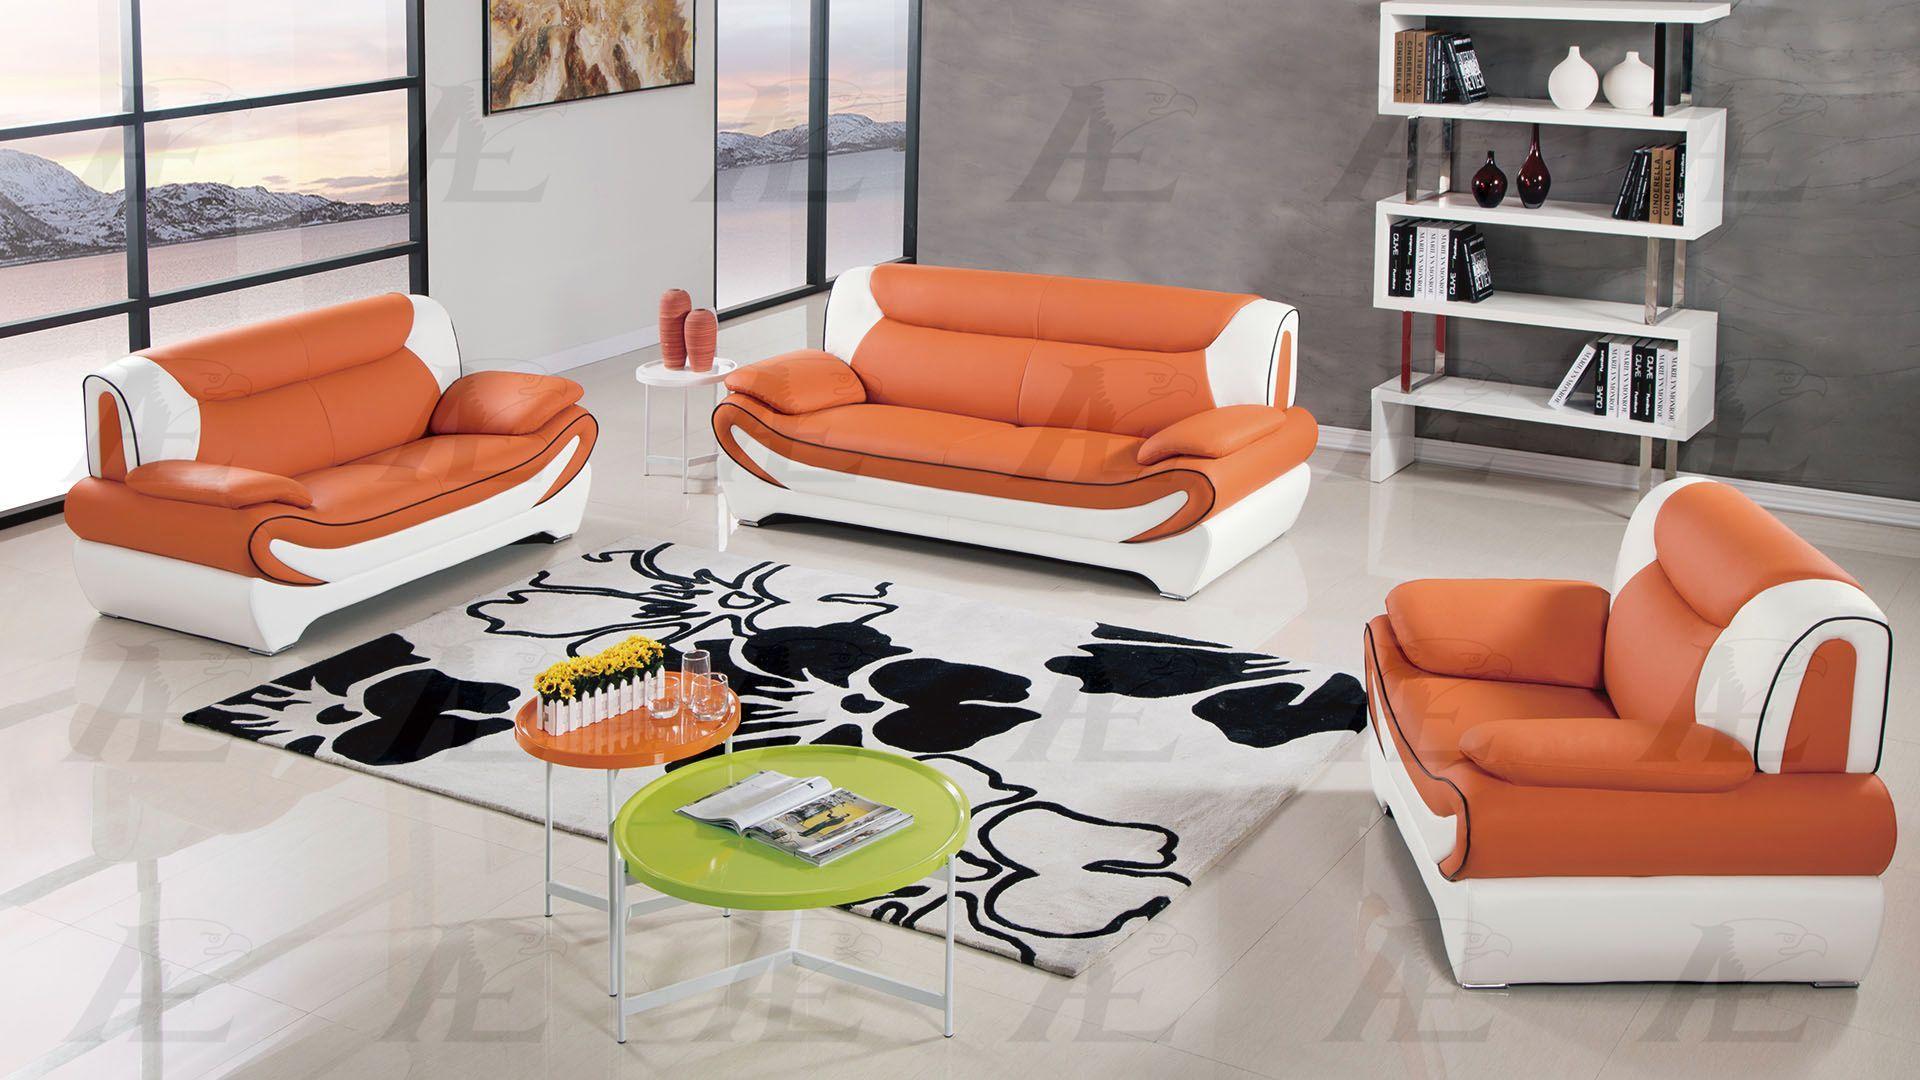 Contemporary, Modern Sofa Set AE209-ORG.IV AE209-ORG.IV-Set-3 in White, Orange Bonded Leather